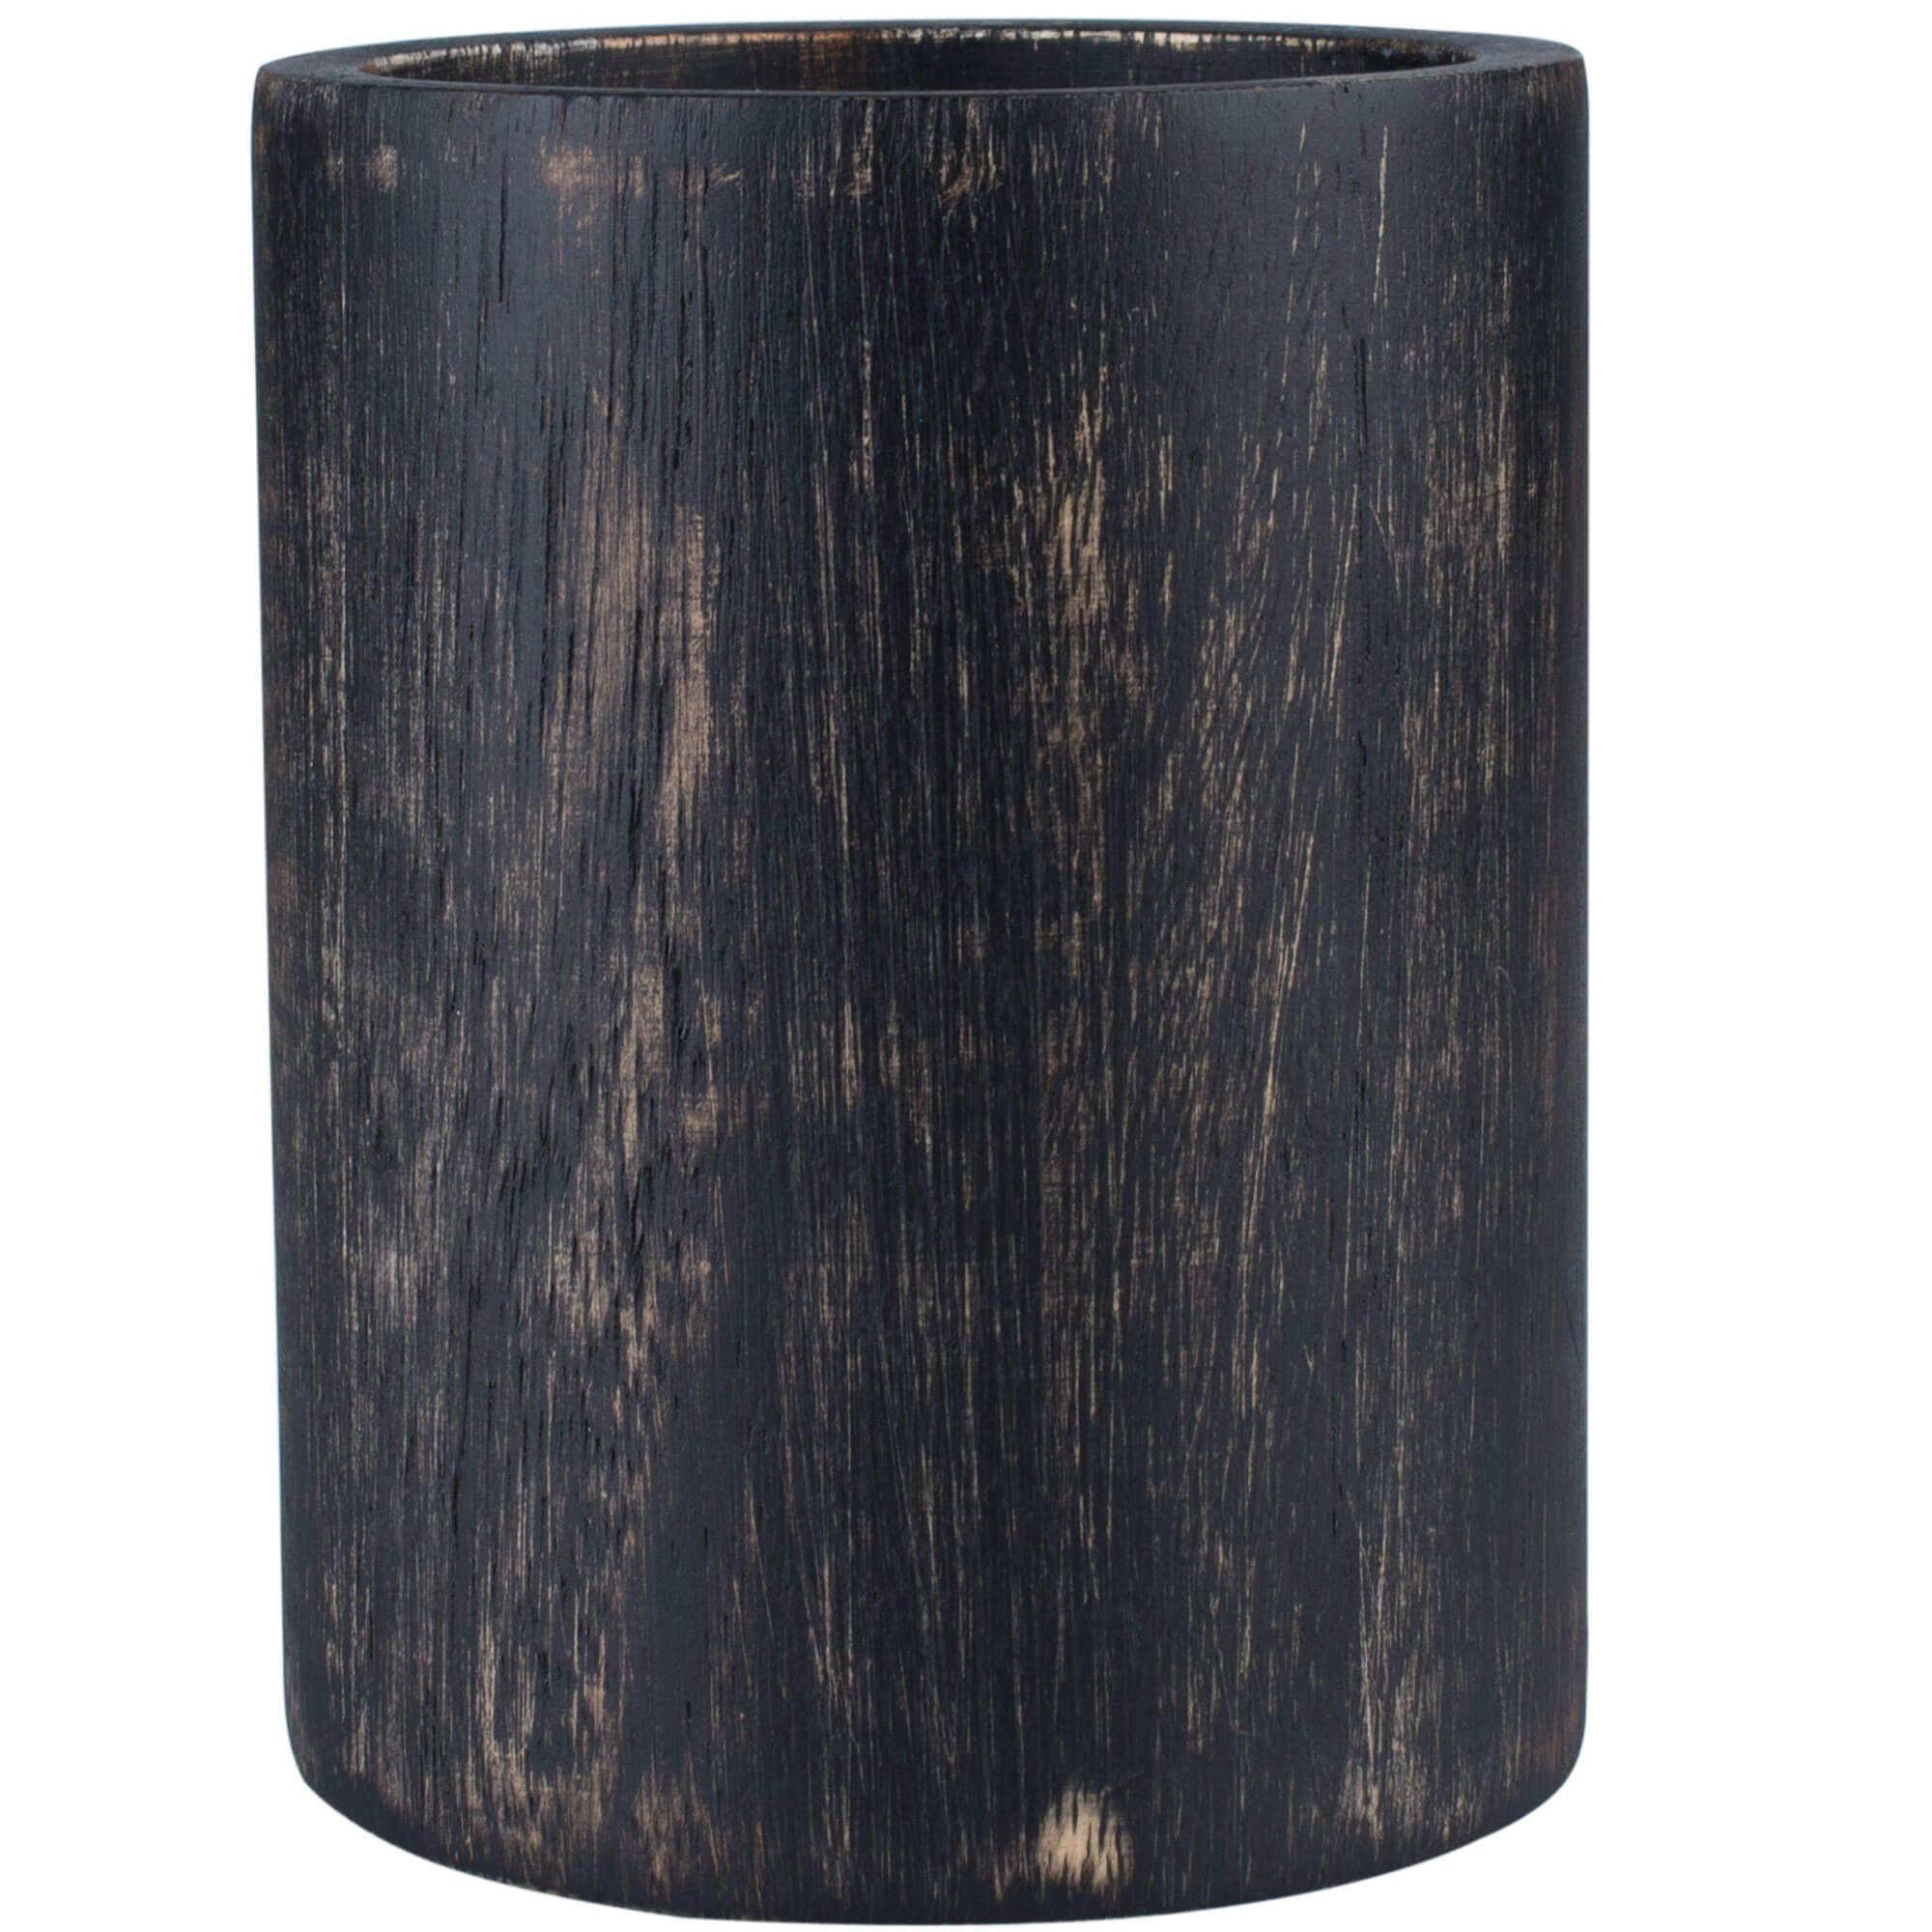 Cutlery holder acacia wood black/washed - 10x13,2cm